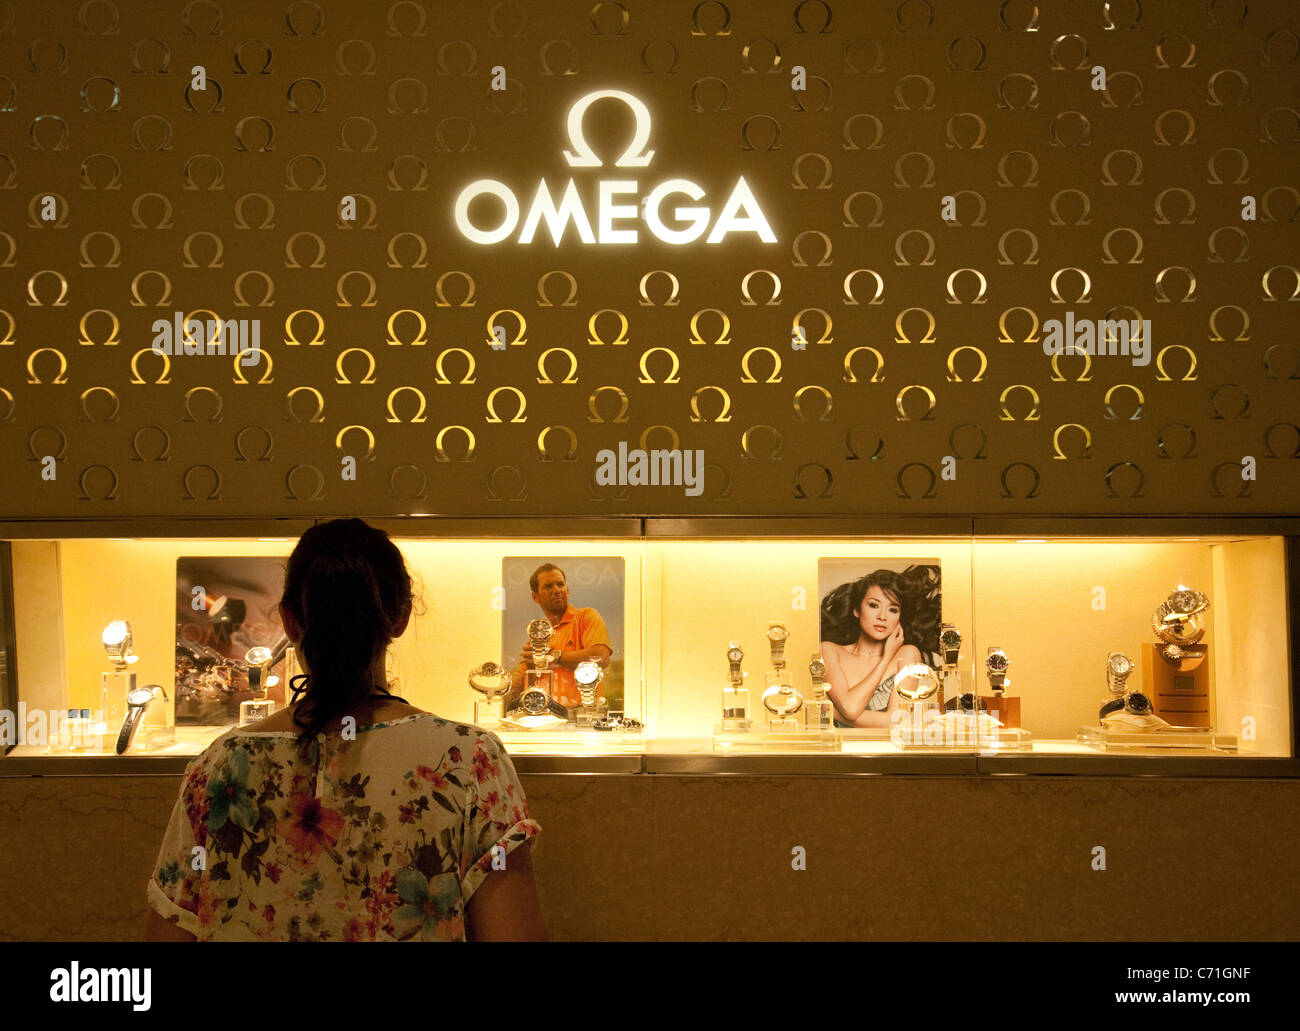 omega watch showroom